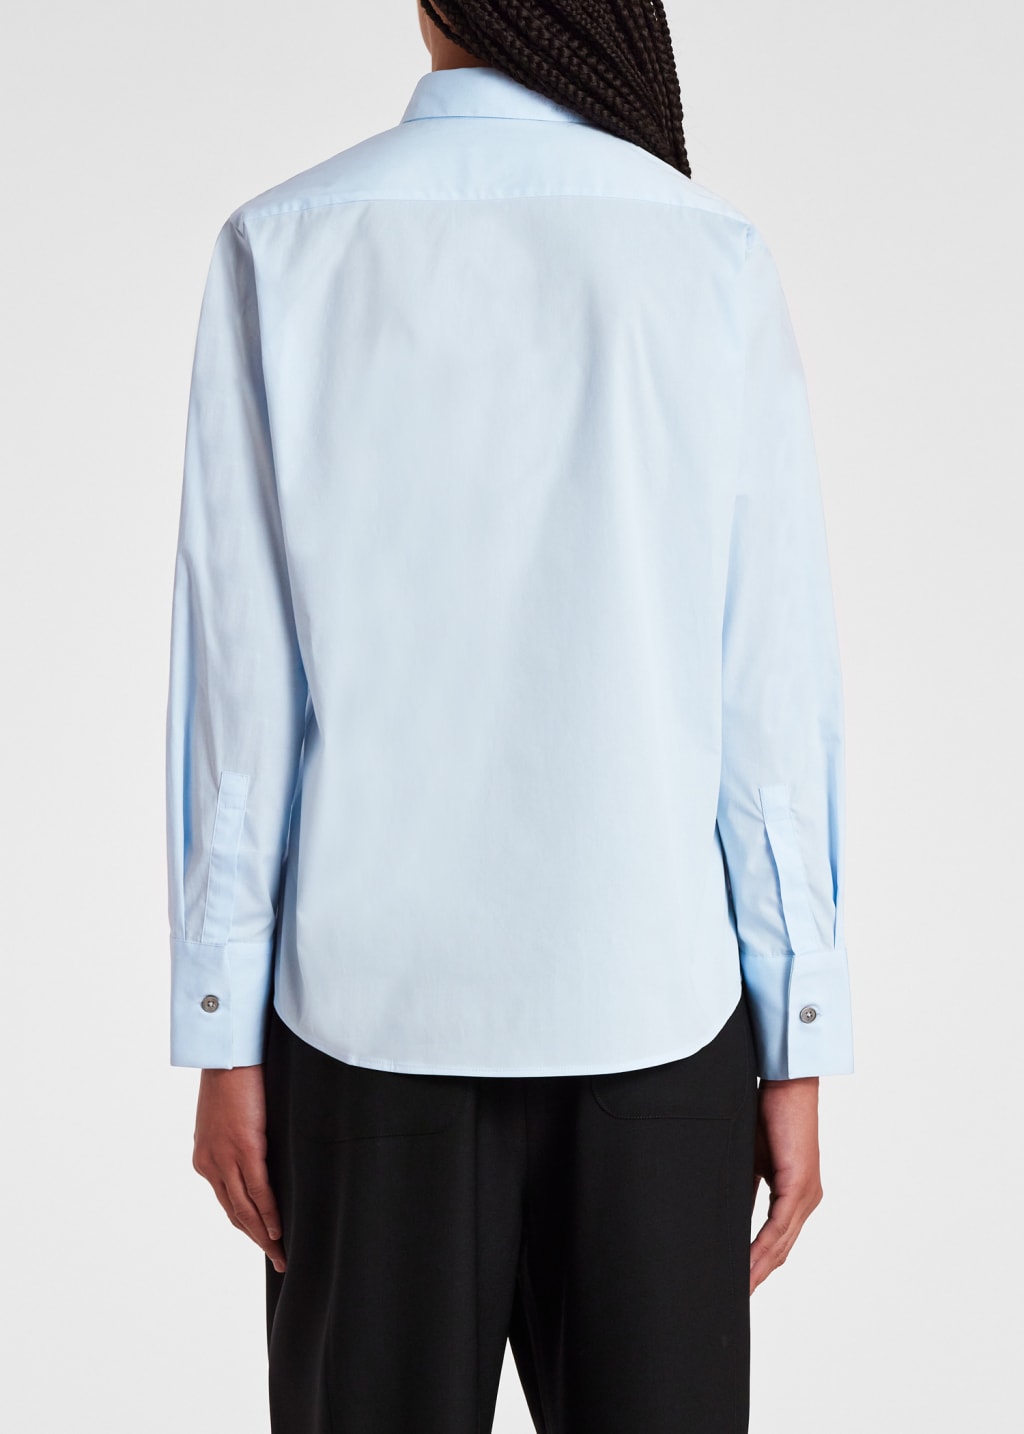 Model View - Women's Light Blue Cotton 'Spray Swirl' Cuff Shirt by Paul Smith